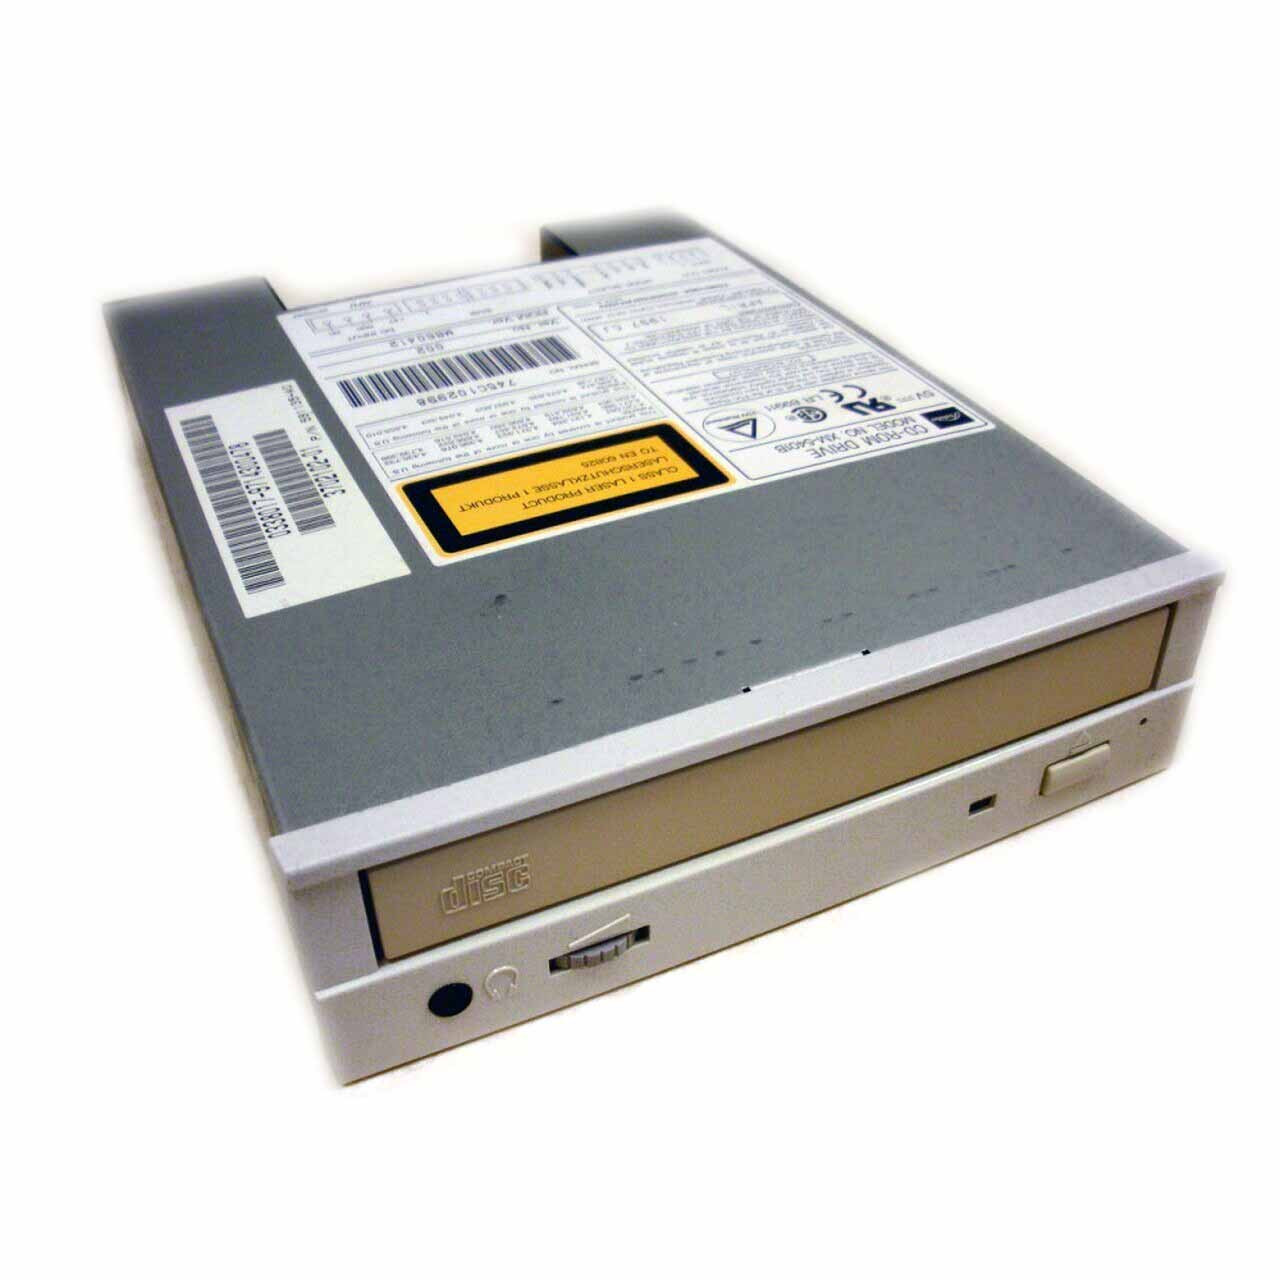 Sun 370-2102 4x Speed CD-ROM Optical Drive